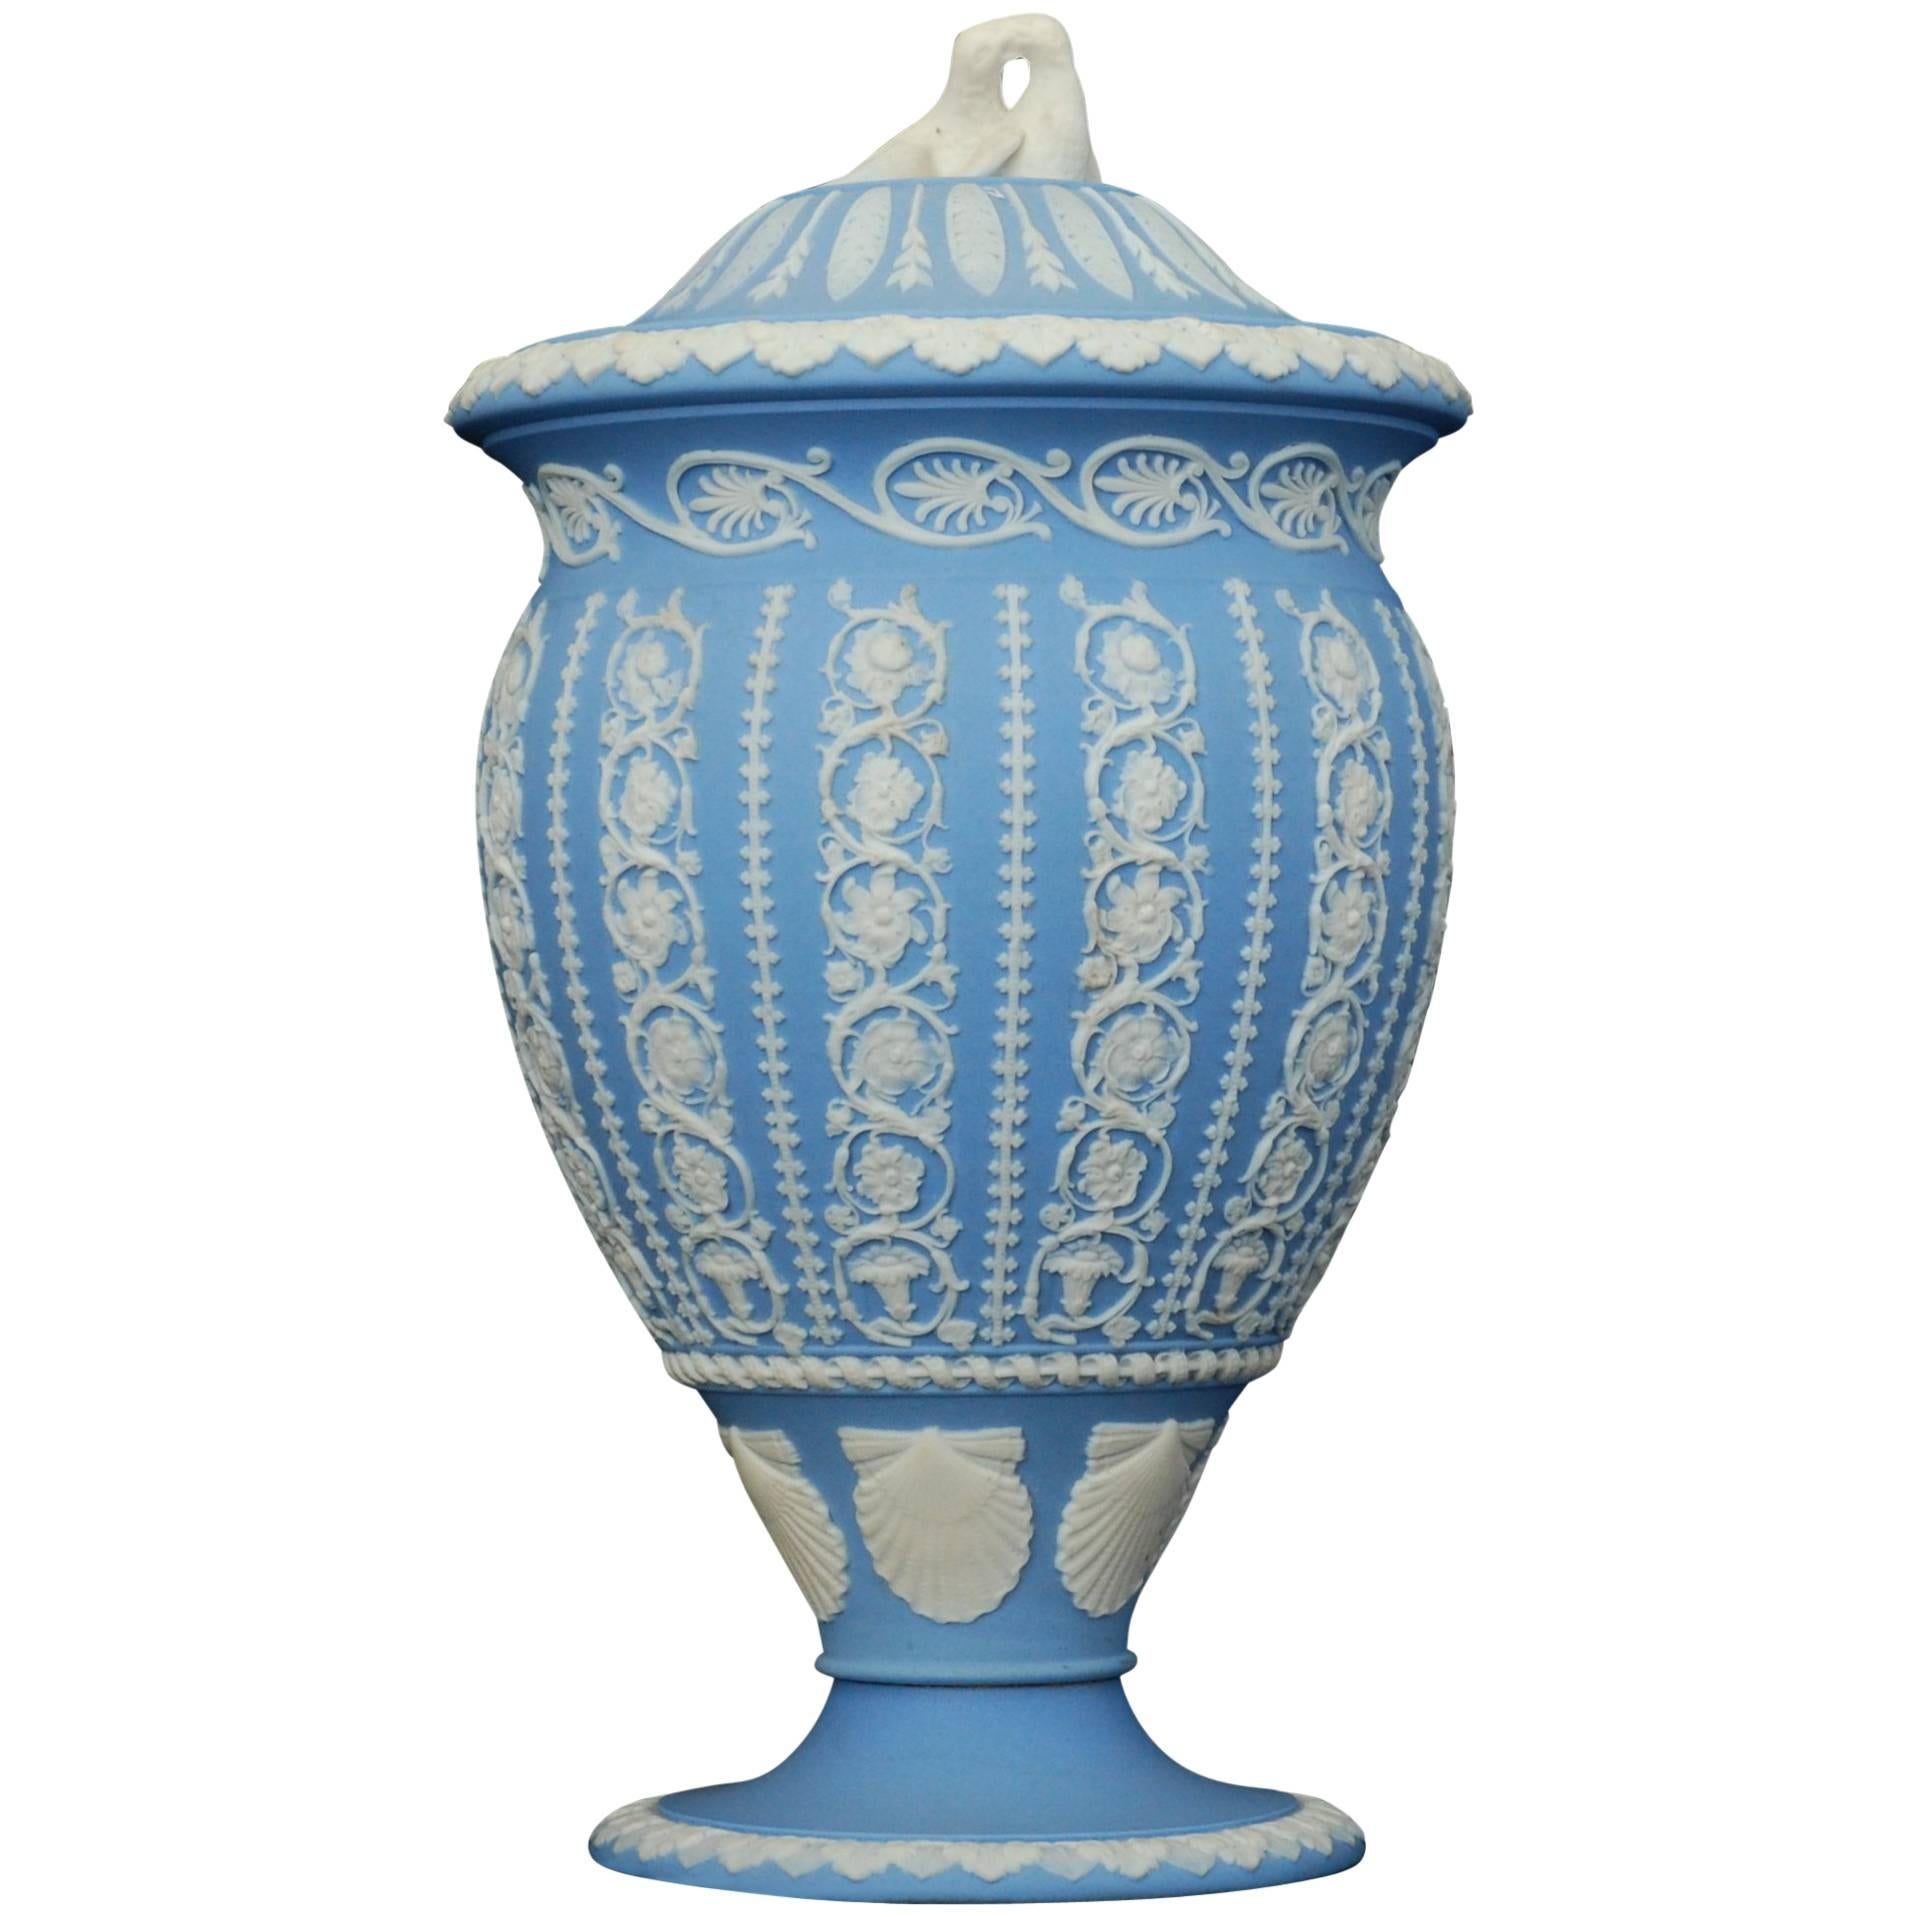 Jasperware Vase, Shell and Arabeqsue, Wedgwood, circa 1800